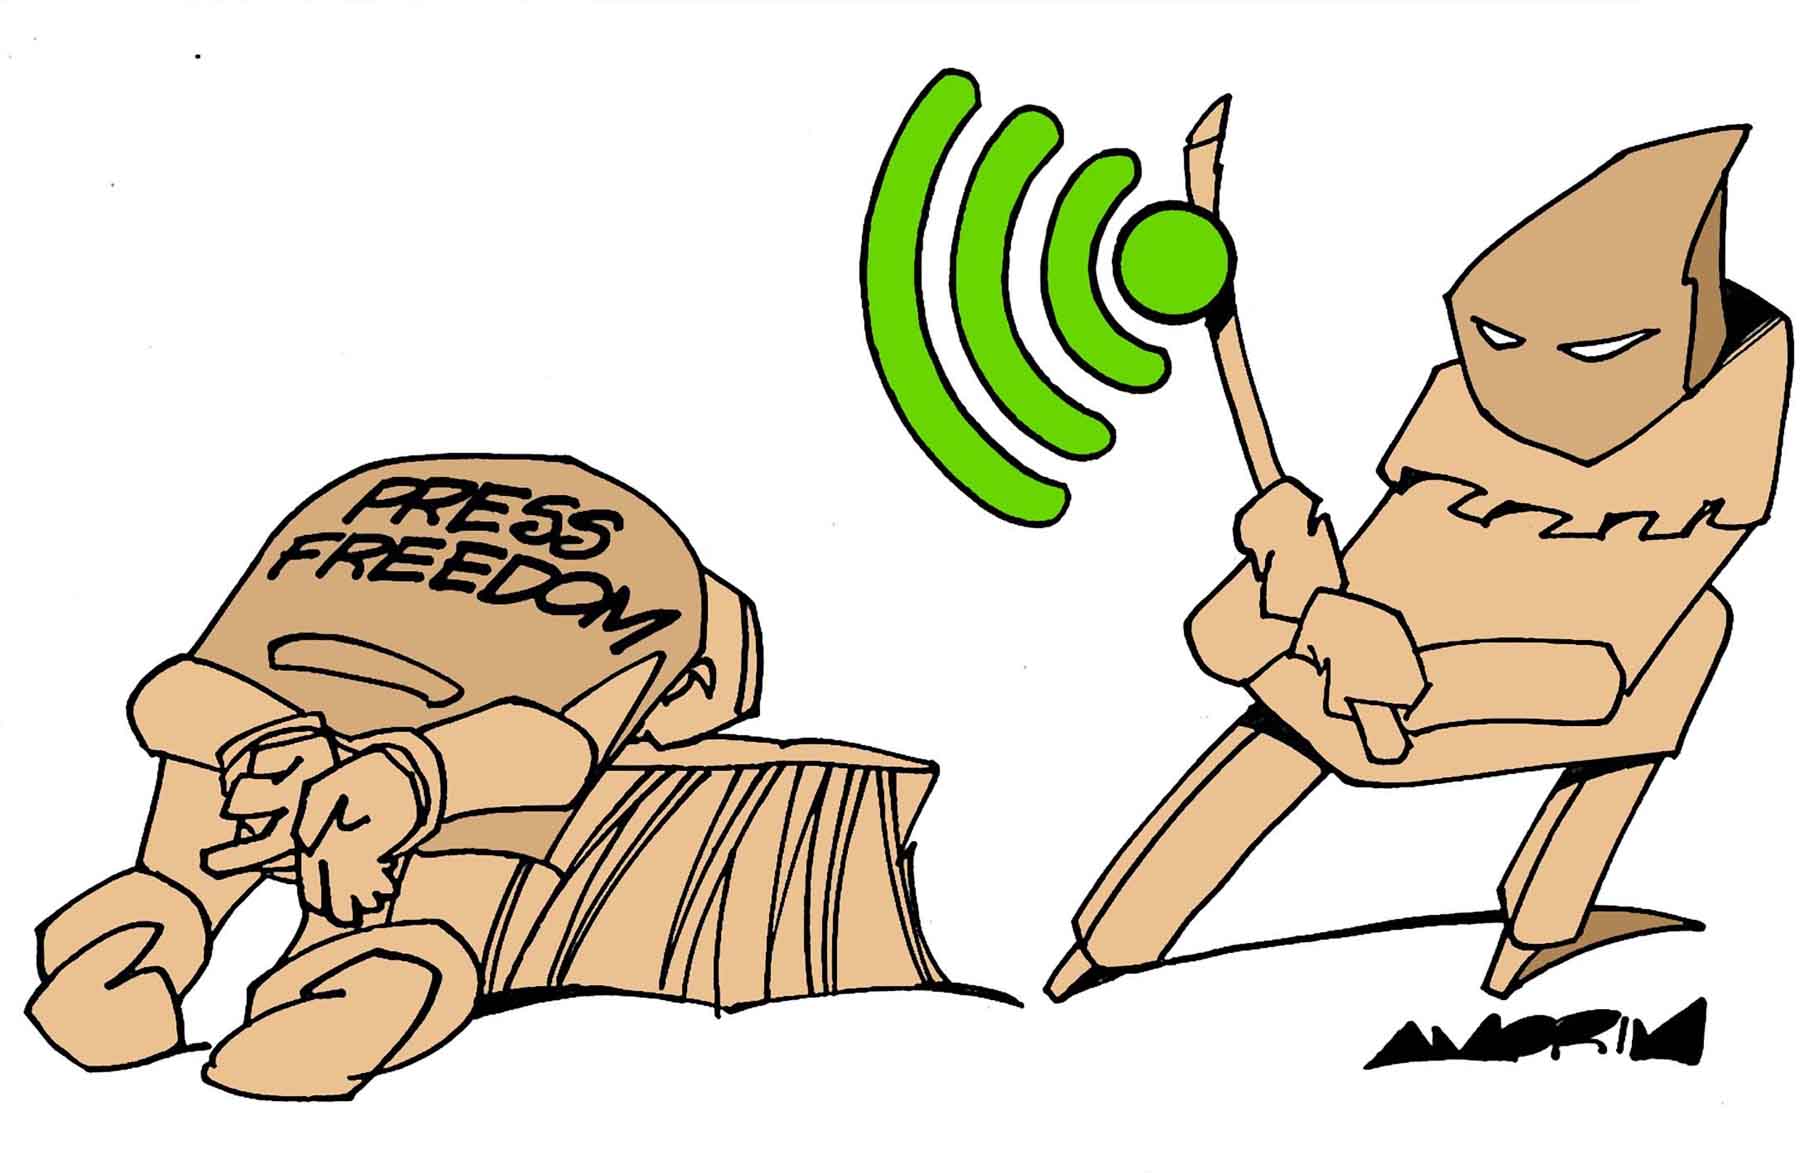 Egypt Cartoon .. Cartoon by Amorim - Brazil